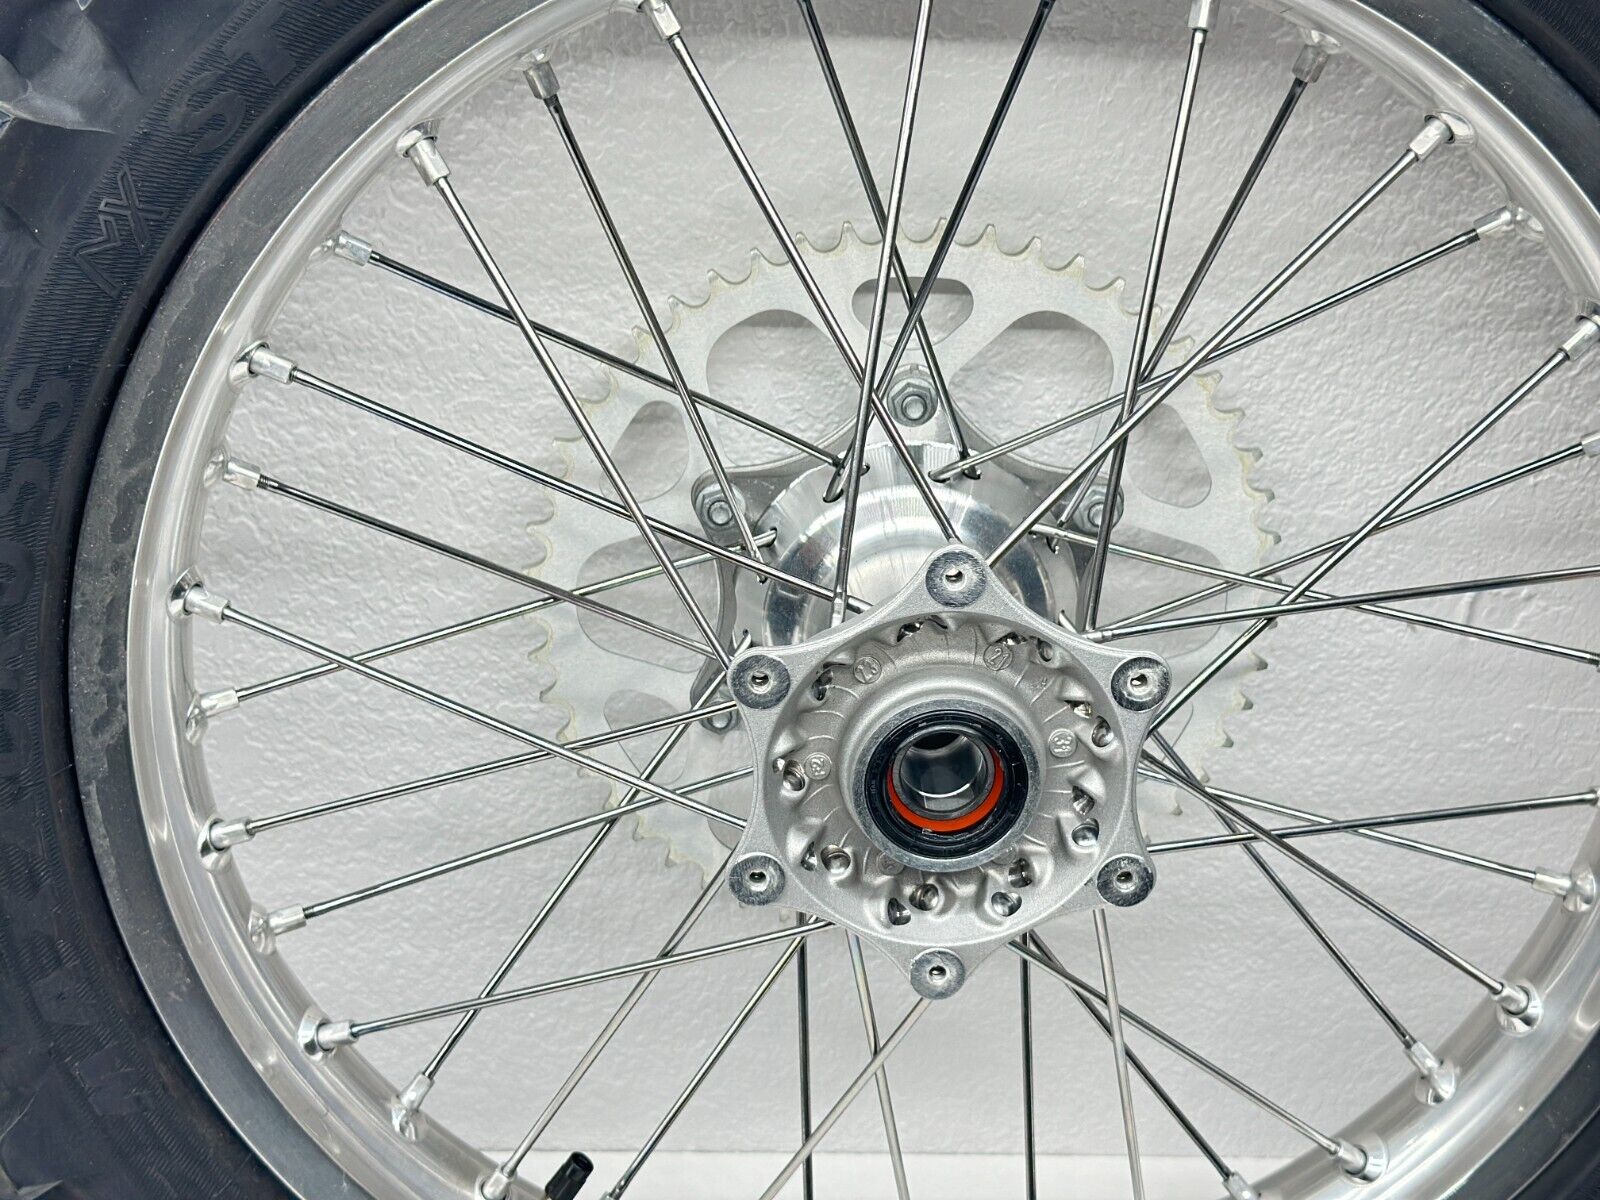 New 2024 GasGas MC250F Wheel Set Assembly Rim Hub Rotor Sprocket Rear Front KTM